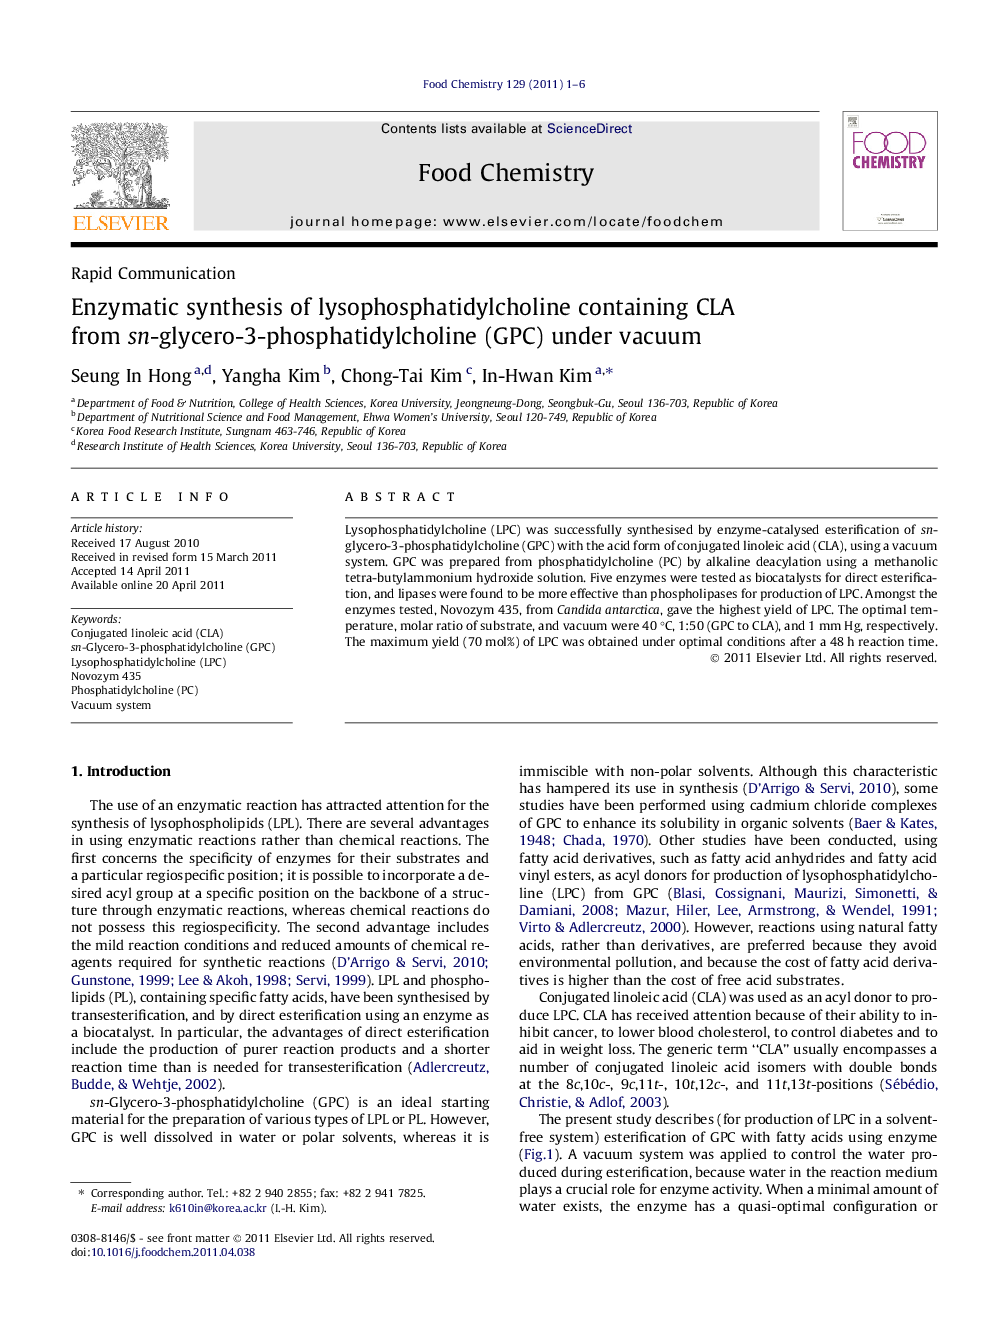 Enzymatic synthesis of lysophosphatidylcholine containing CLA from sn-glycero-3-phosphatidylcholine (GPC) under vacuum